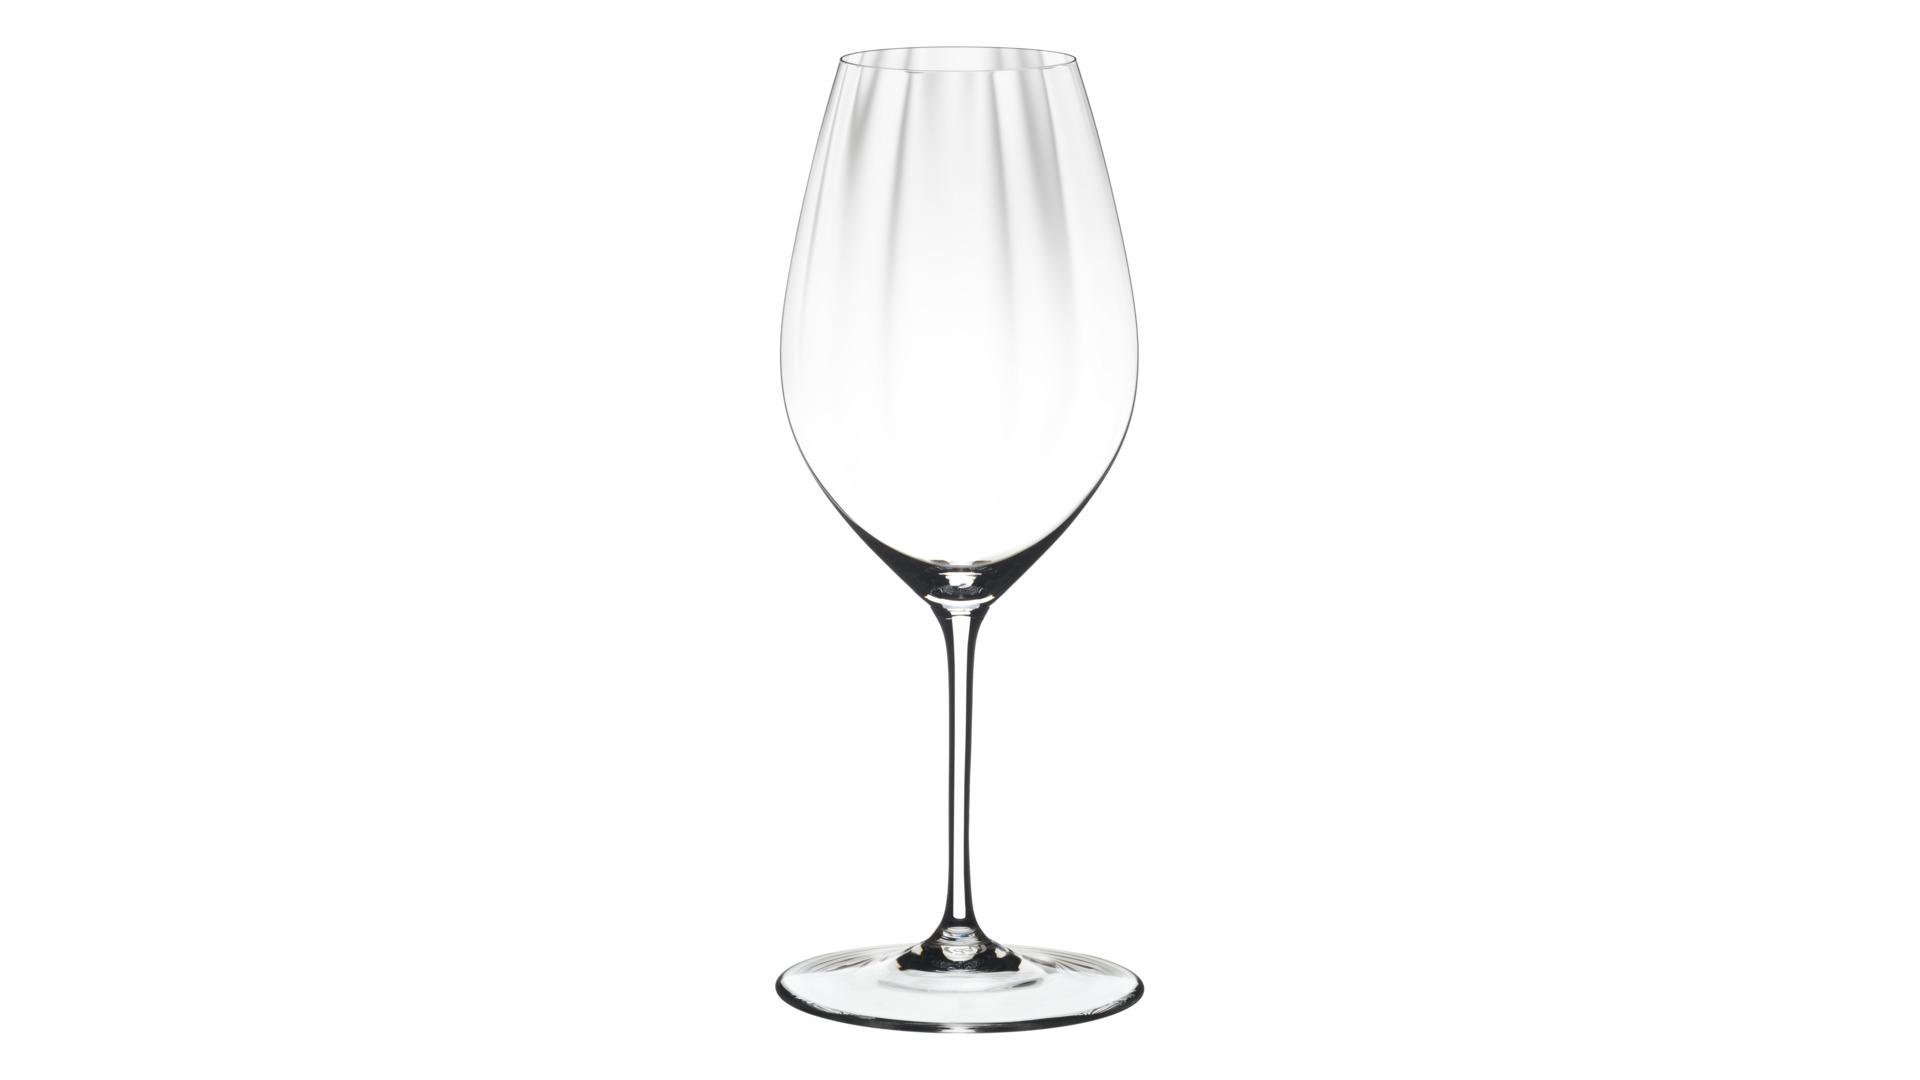 Бокал для белого вина Riedel Performance Riesling 623 мл, h24,5 см, хрусталь